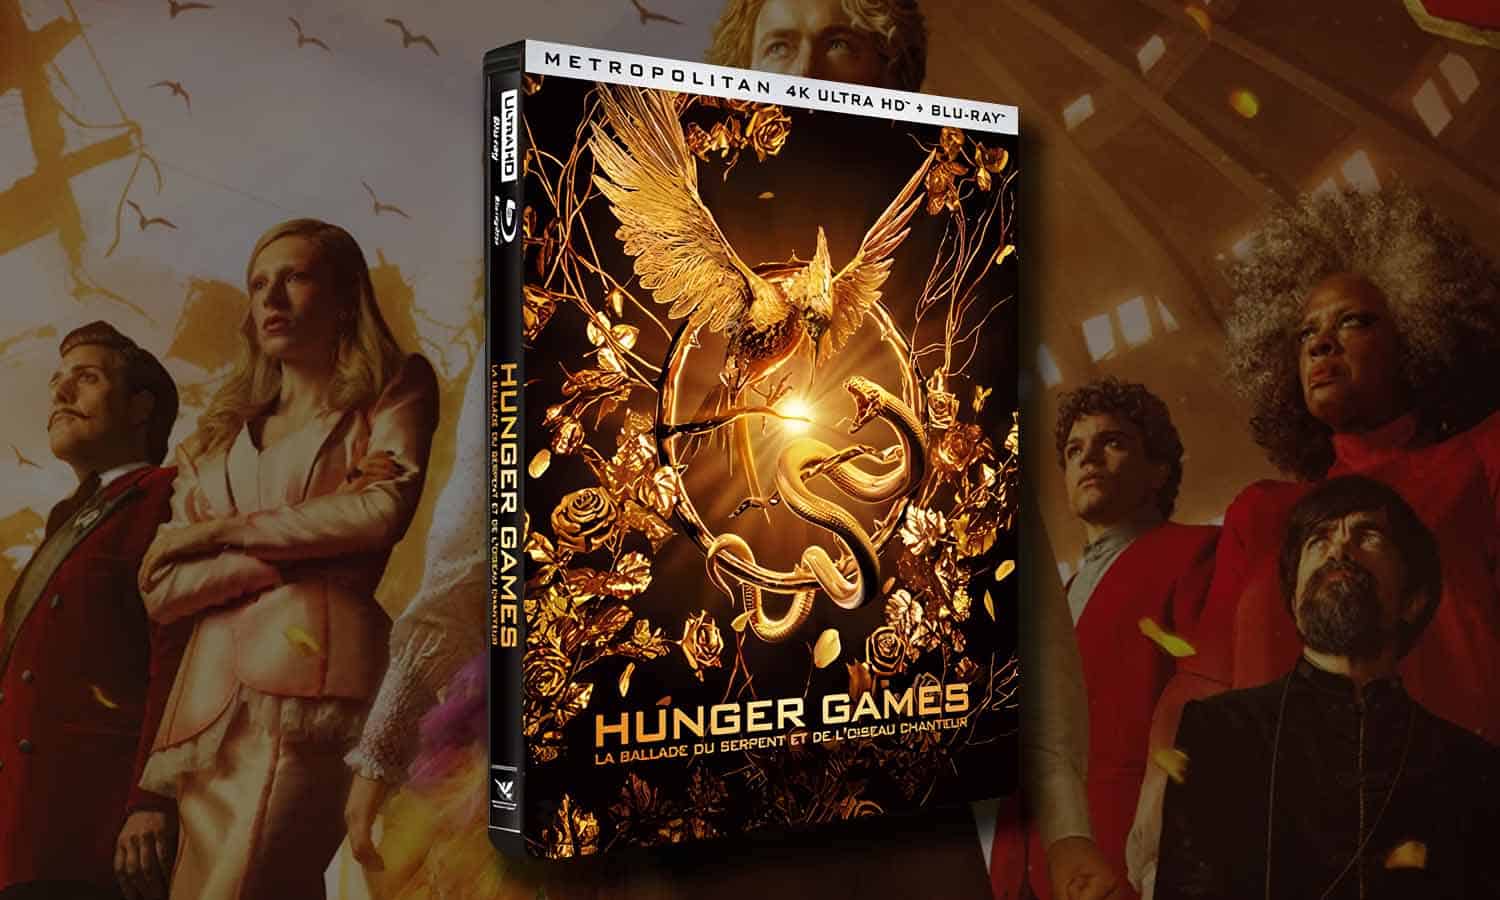 Hunger Games 5 4K Steelbook La Ballade du Serpent et de l'Oiseau